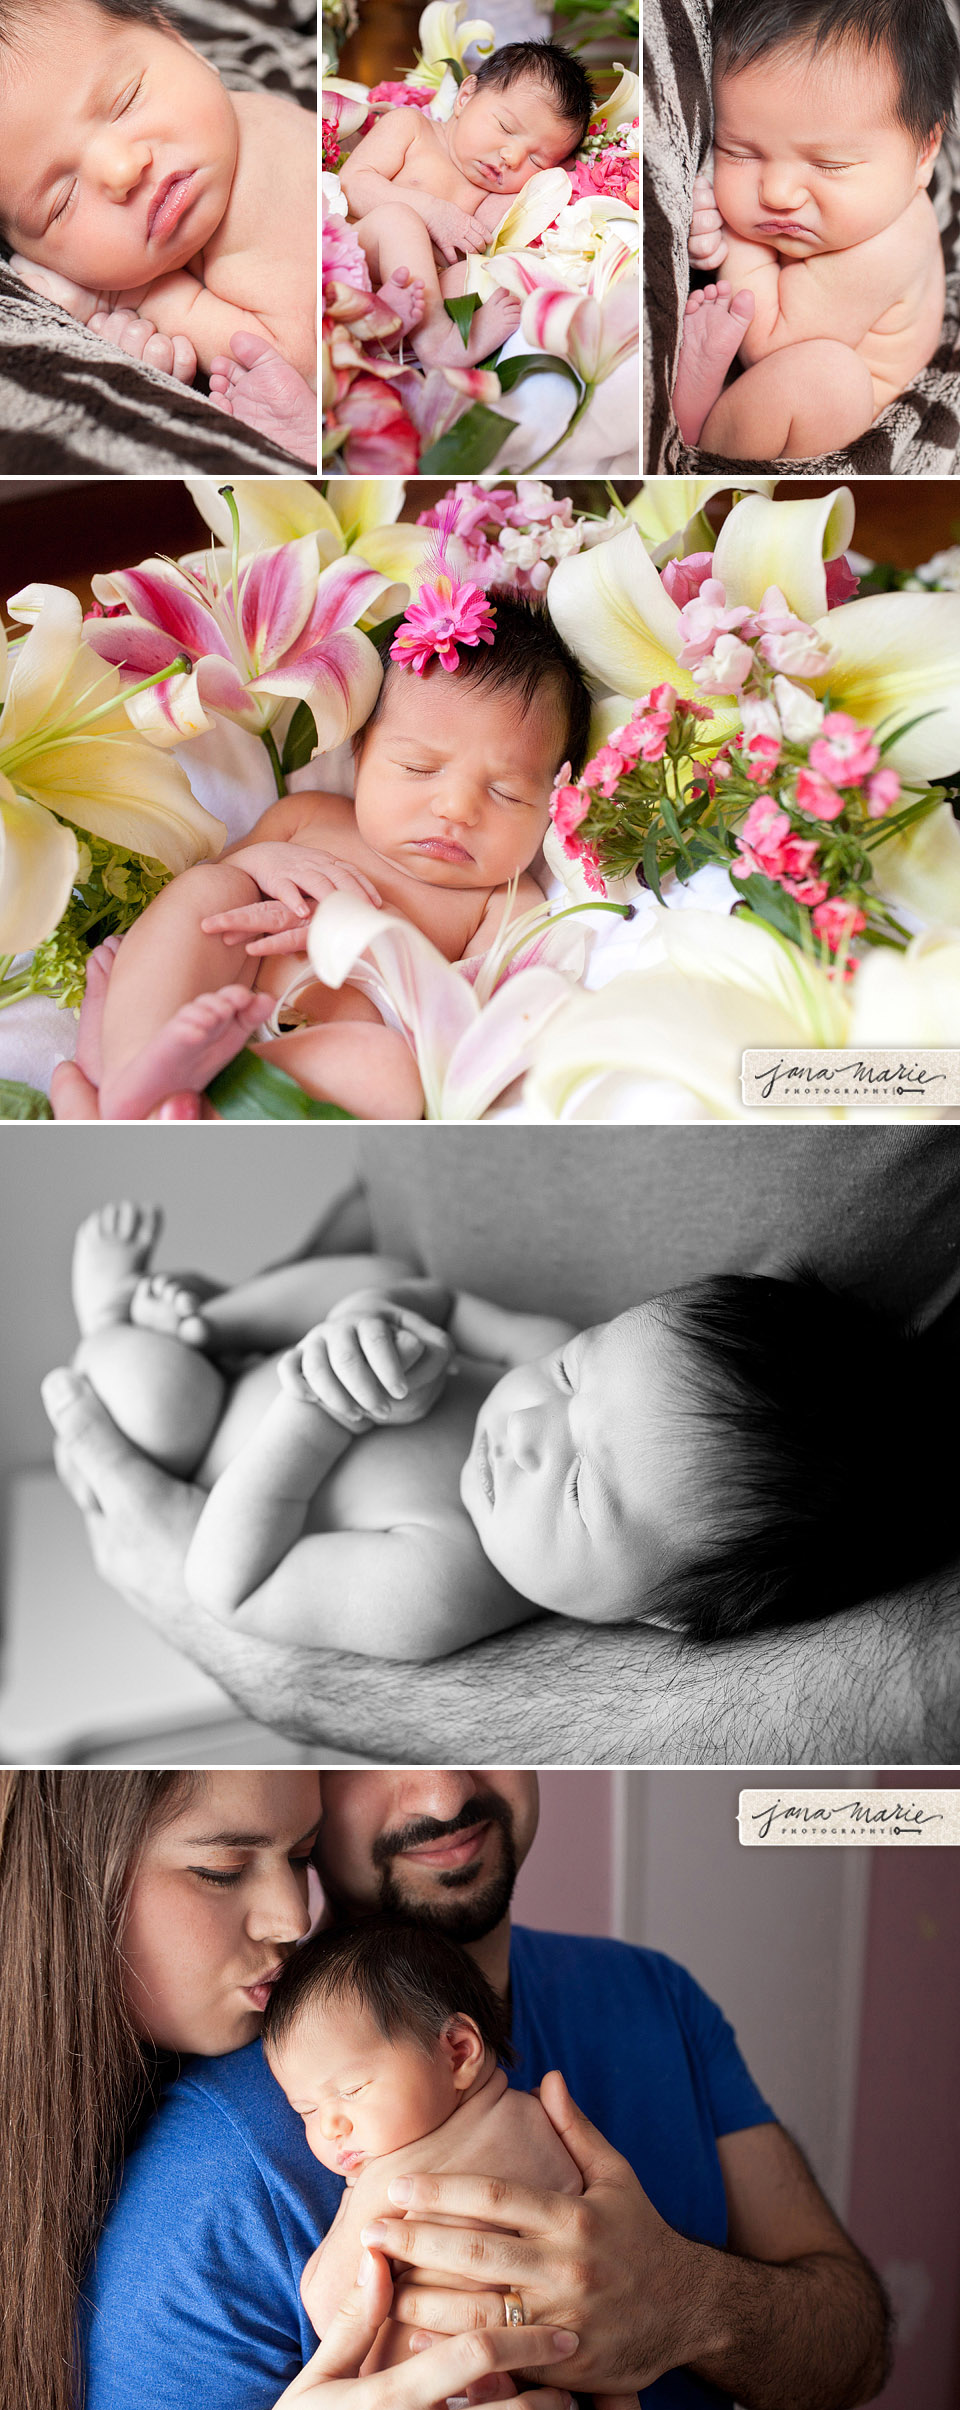 Lily, Flowers, babies, Kansas City portraits, cradle, spring 2012, Jana Marie, Children photography